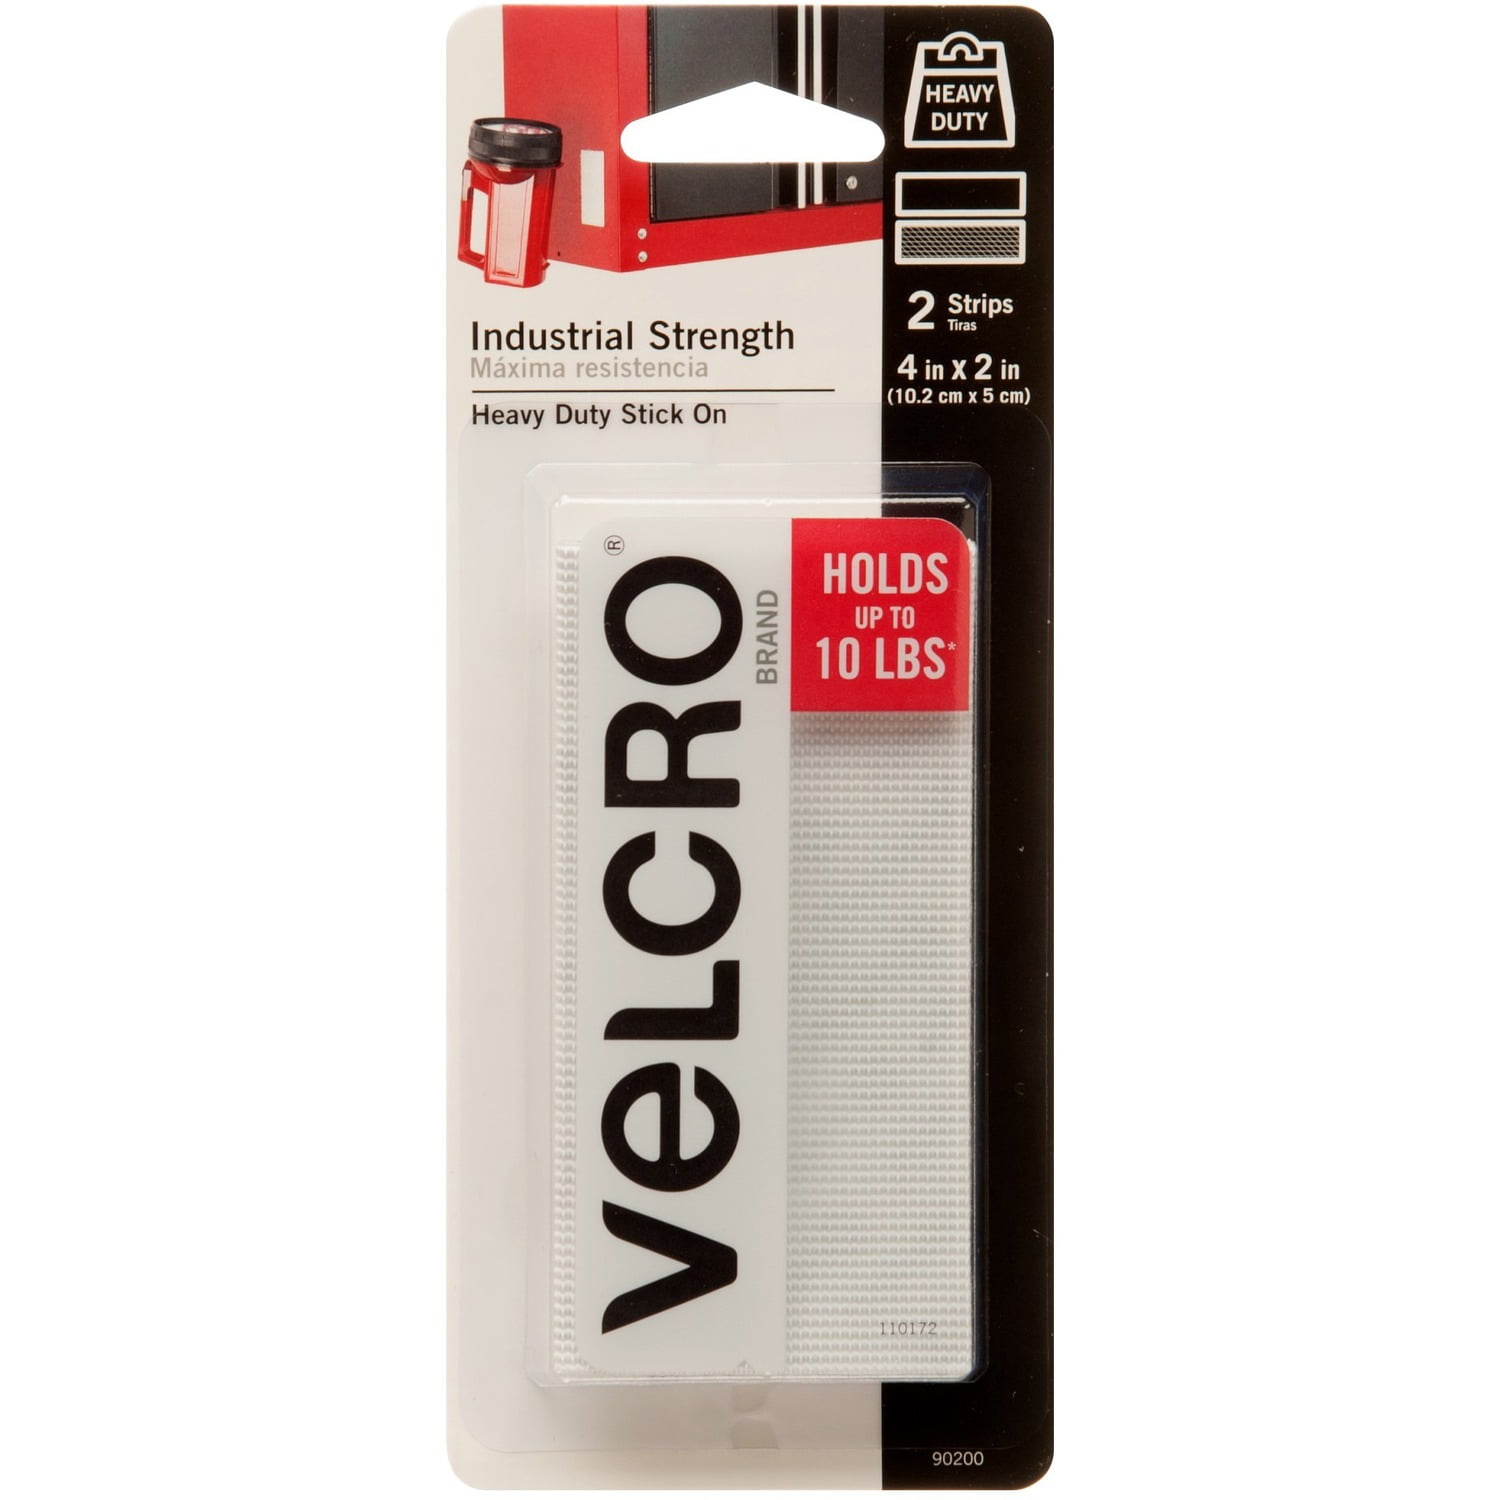 VELCRO Brand Industrial Strength Heavy Duty 4in x 2in Strips White 2 Pack